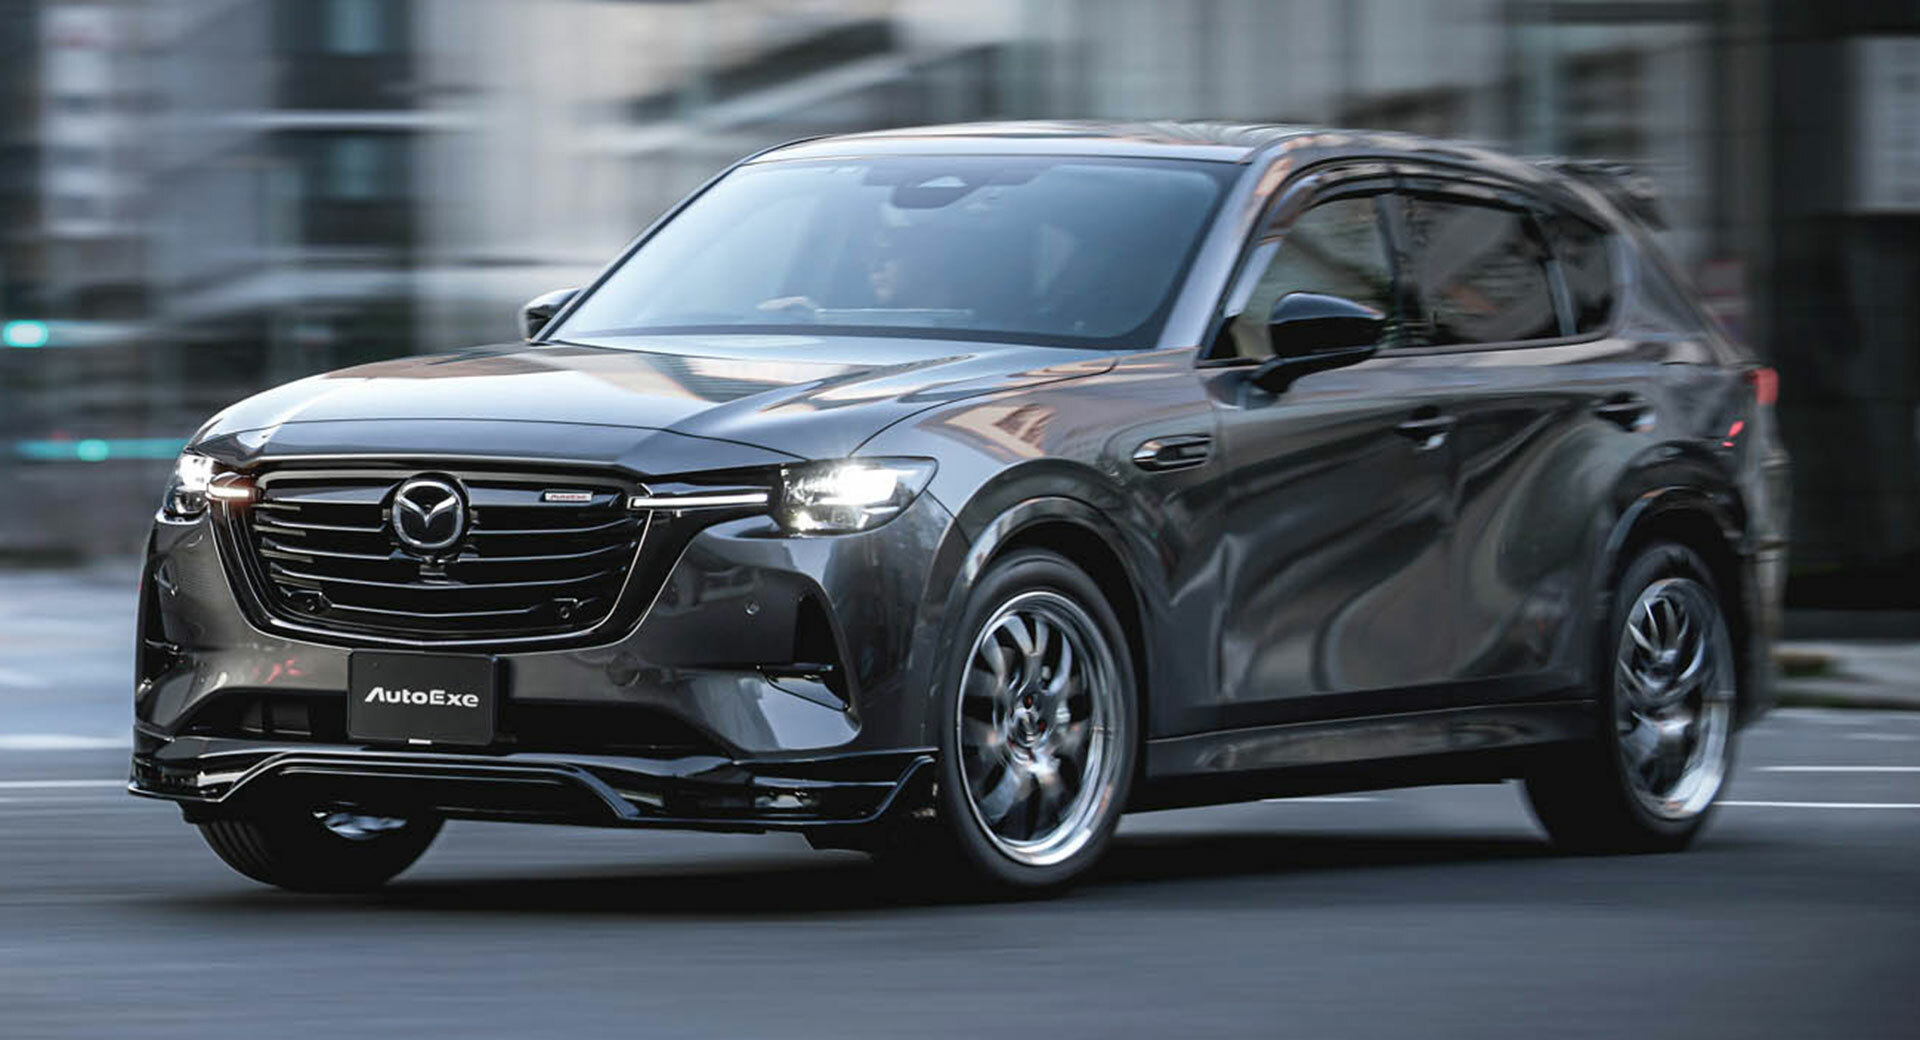 Tuned Mazda models revealed ahead of Tokyo Auto Salon